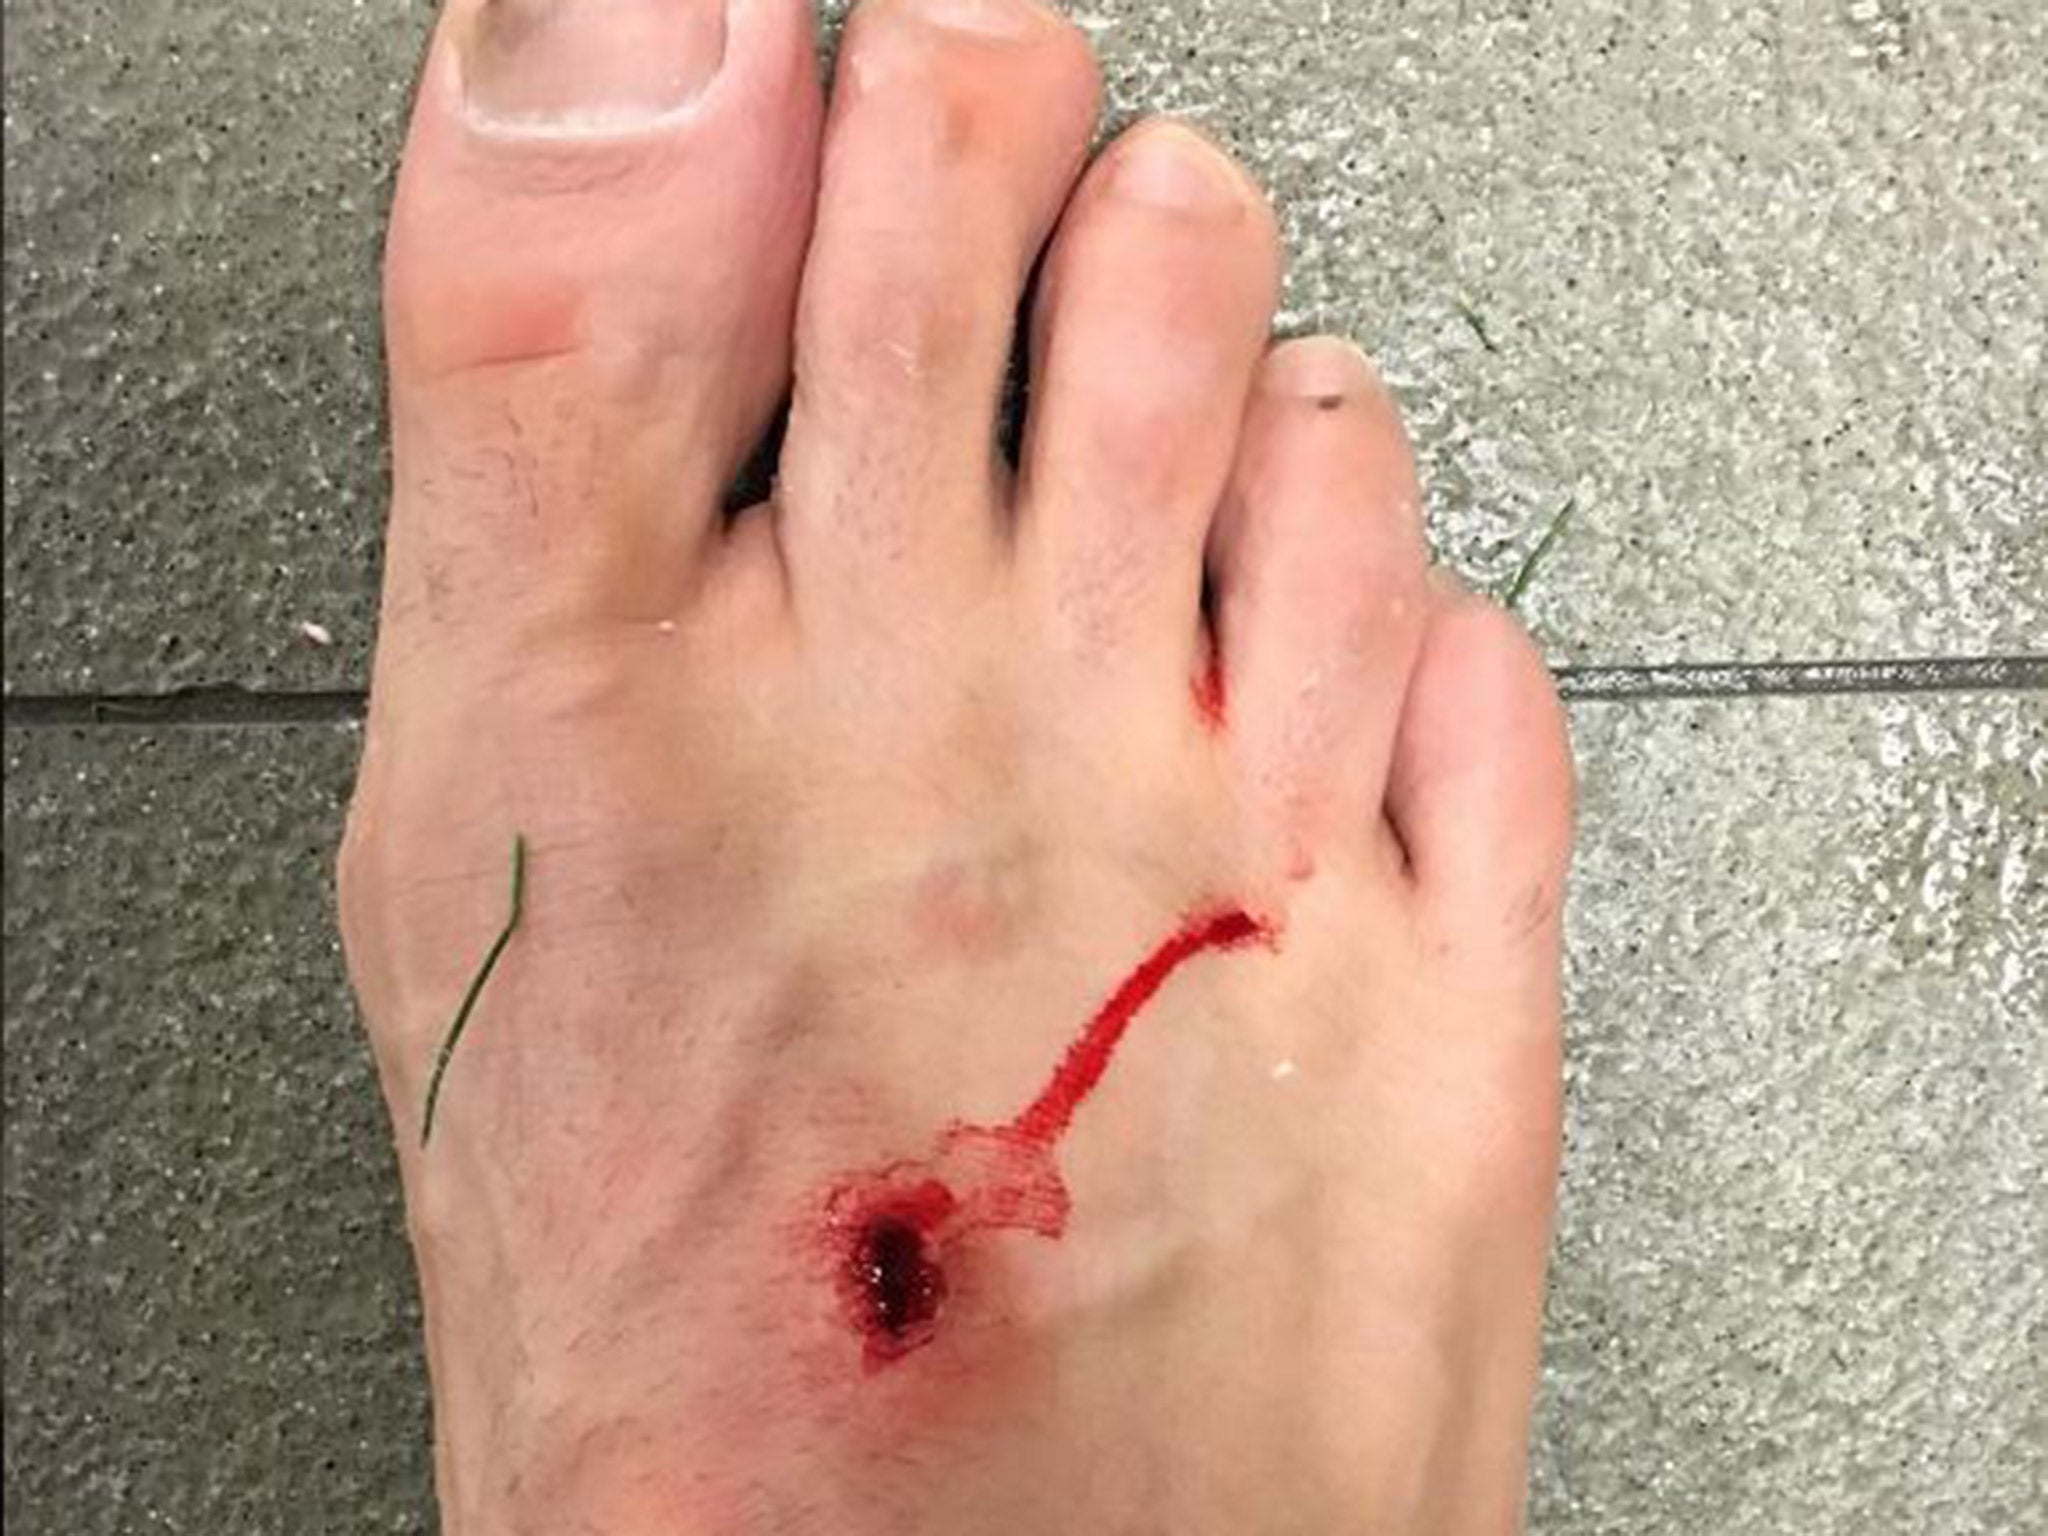 Filipe Luis revealed the gruesome injury on Instagram